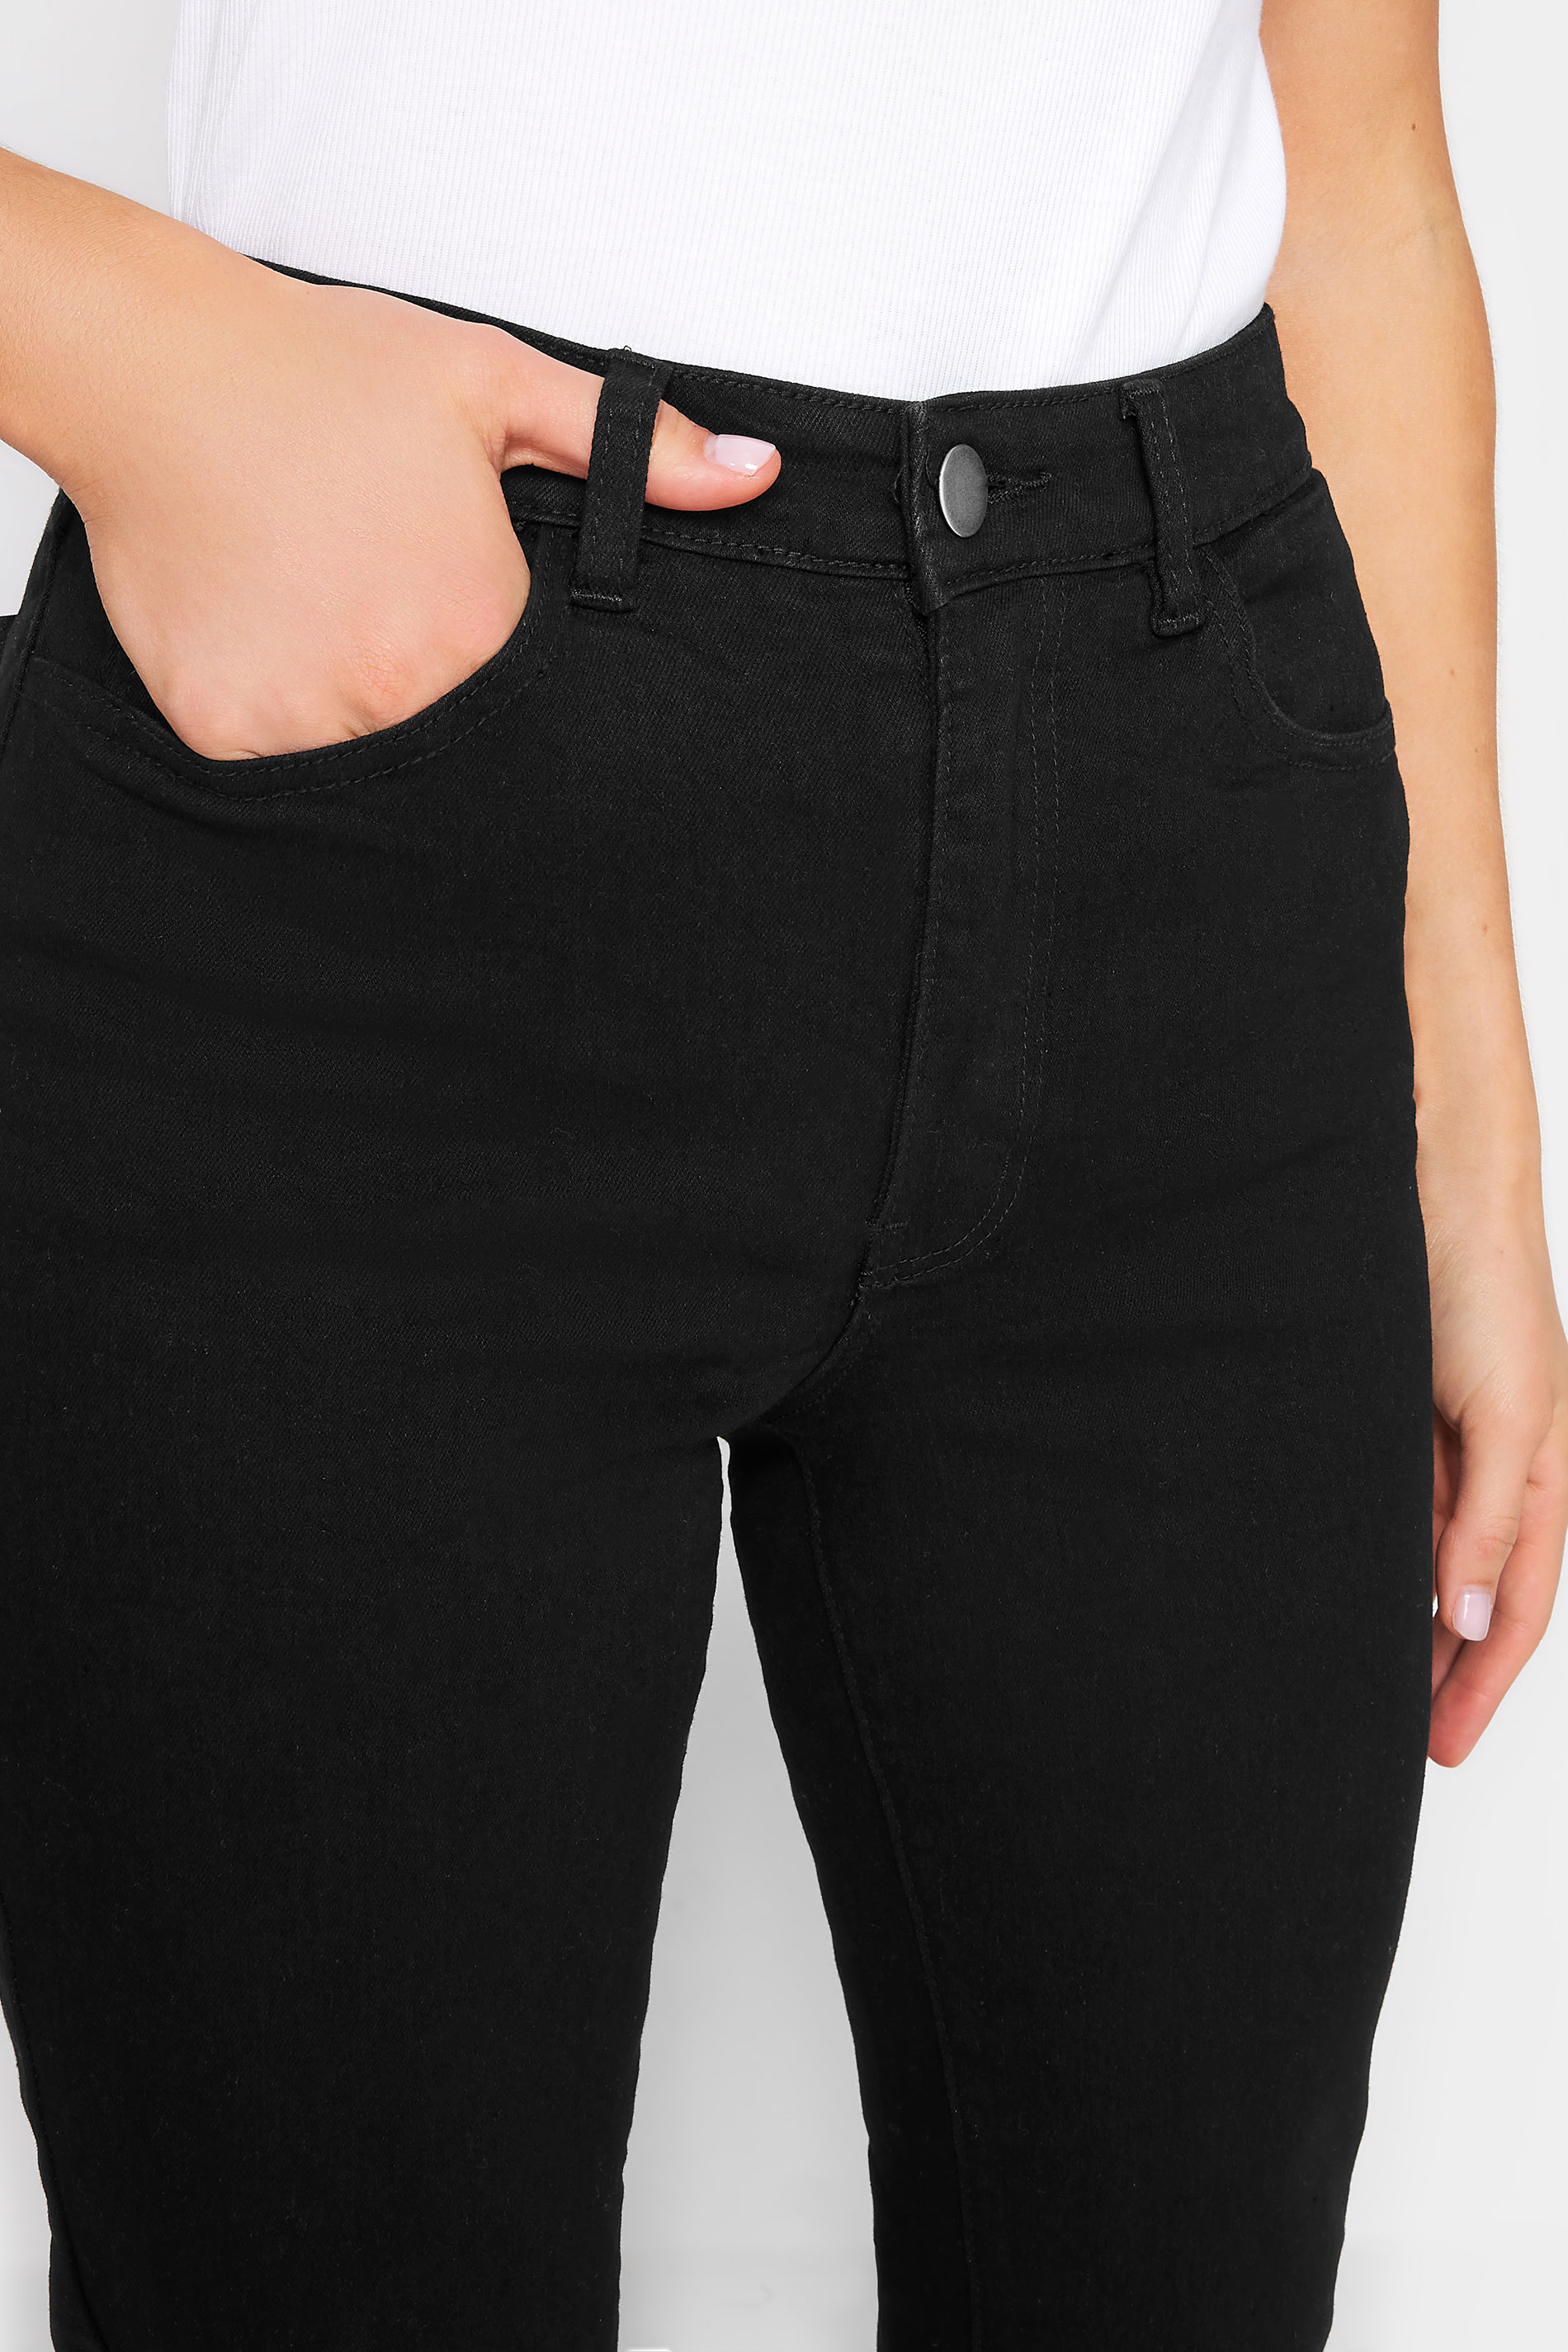 LTS Tall Women's Black Bootcut Denim Jeans | Long Tall Sally 3